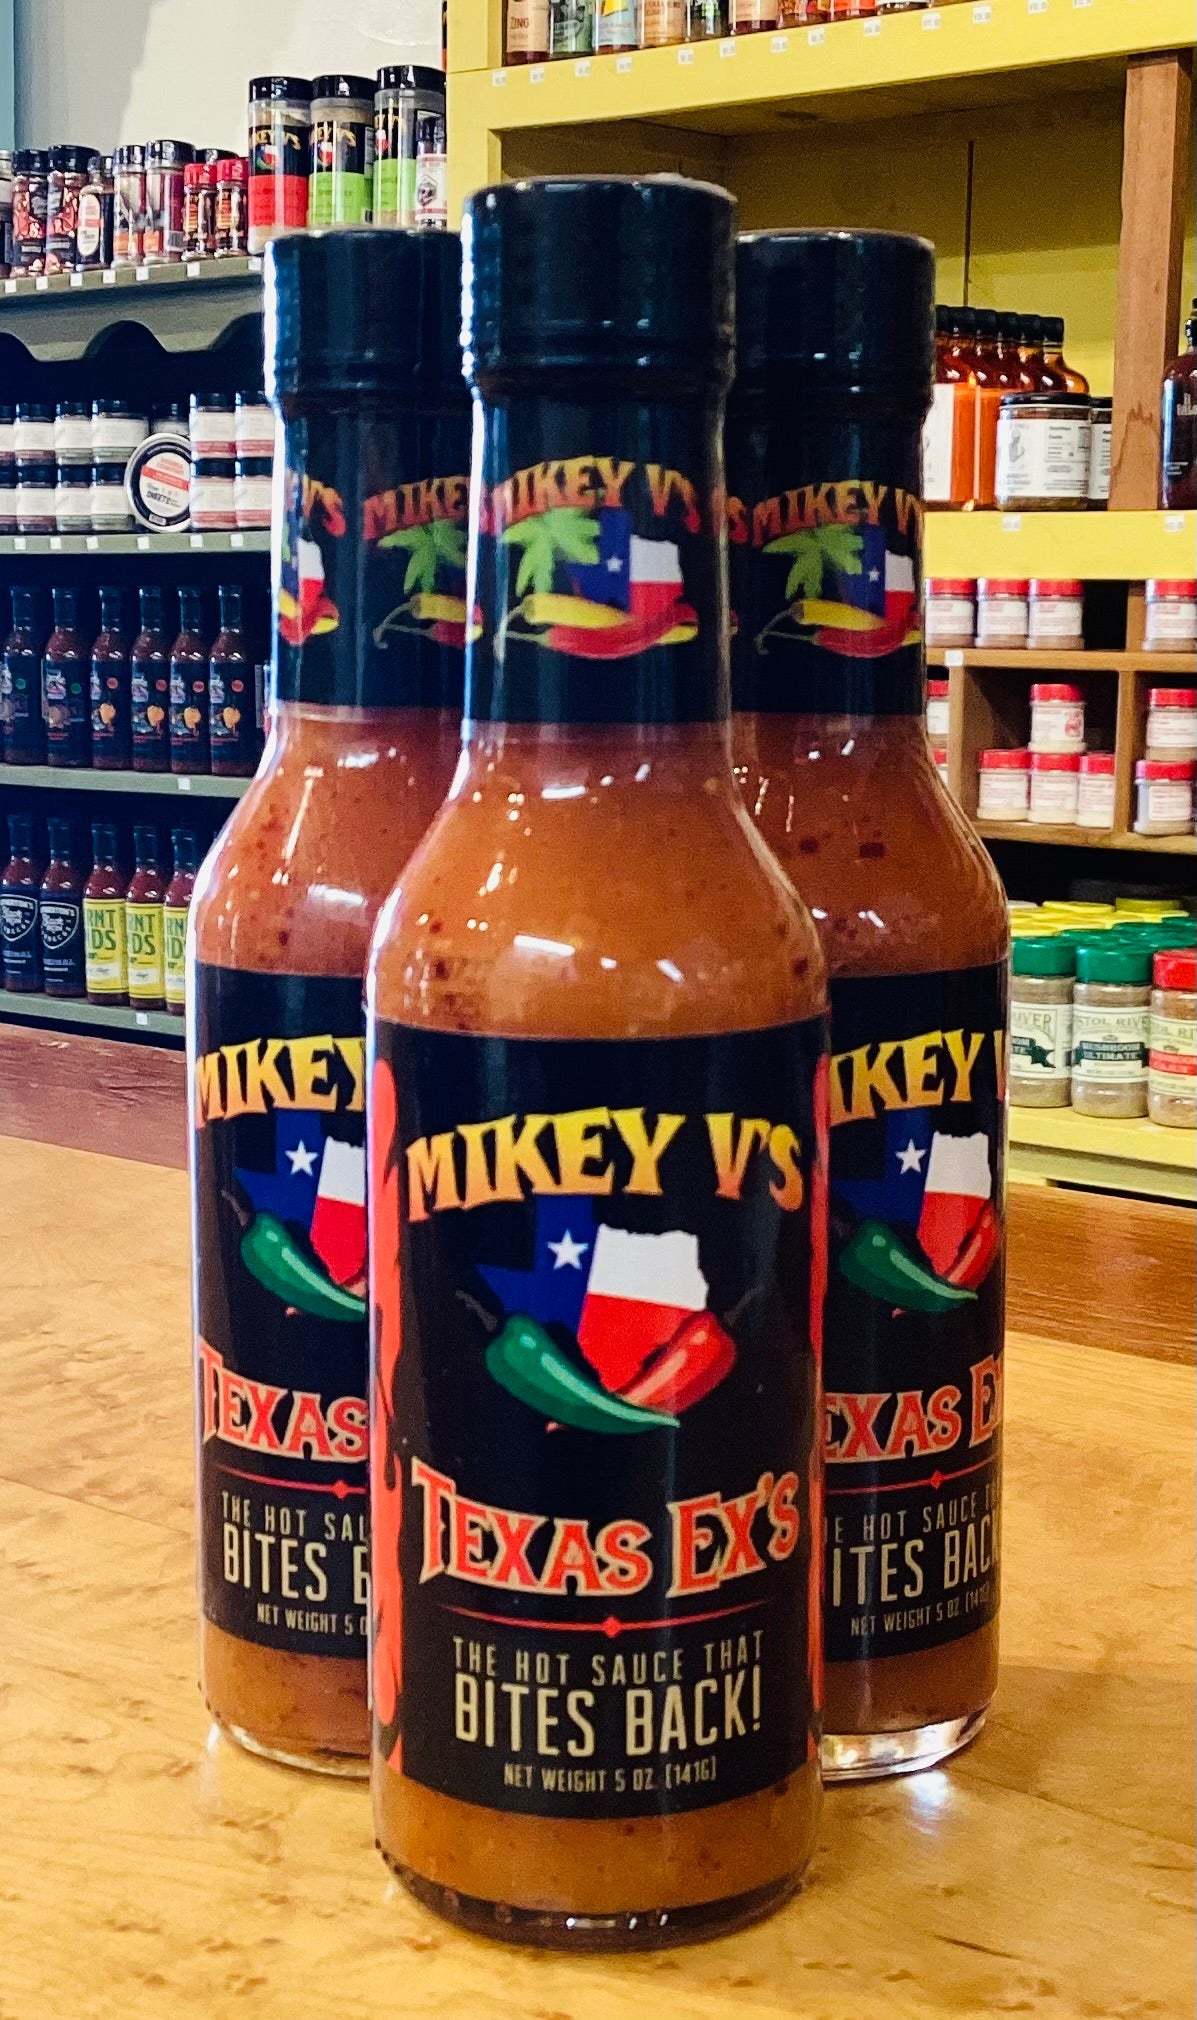 Mikey V's - Texas Ex's Hot Sauce